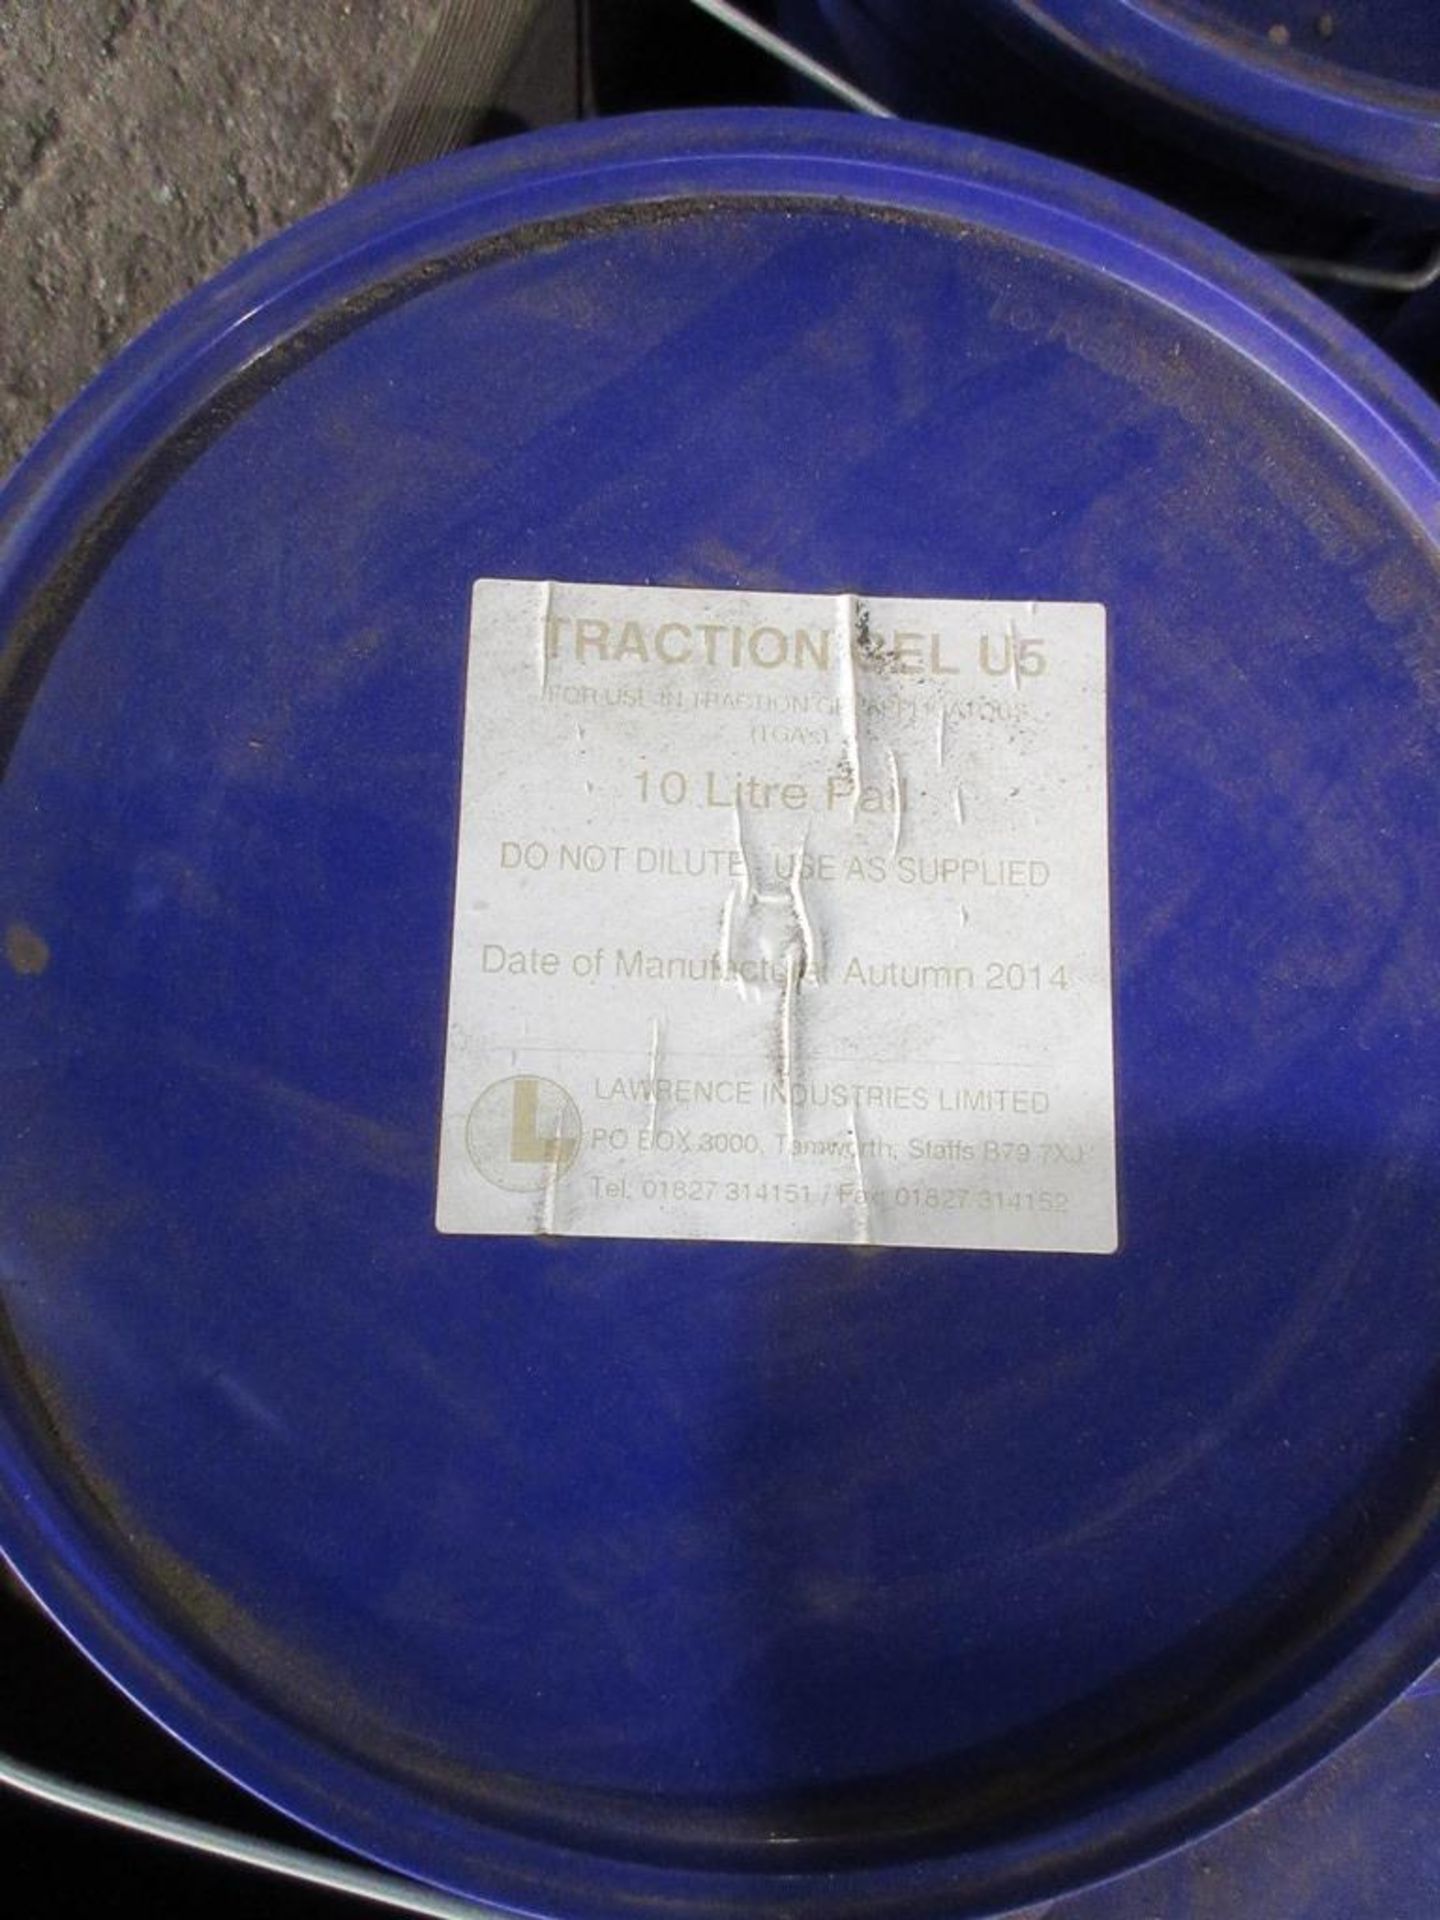 Eleven 10 litre tubs of Traction Gel U5 - Image 2 of 4